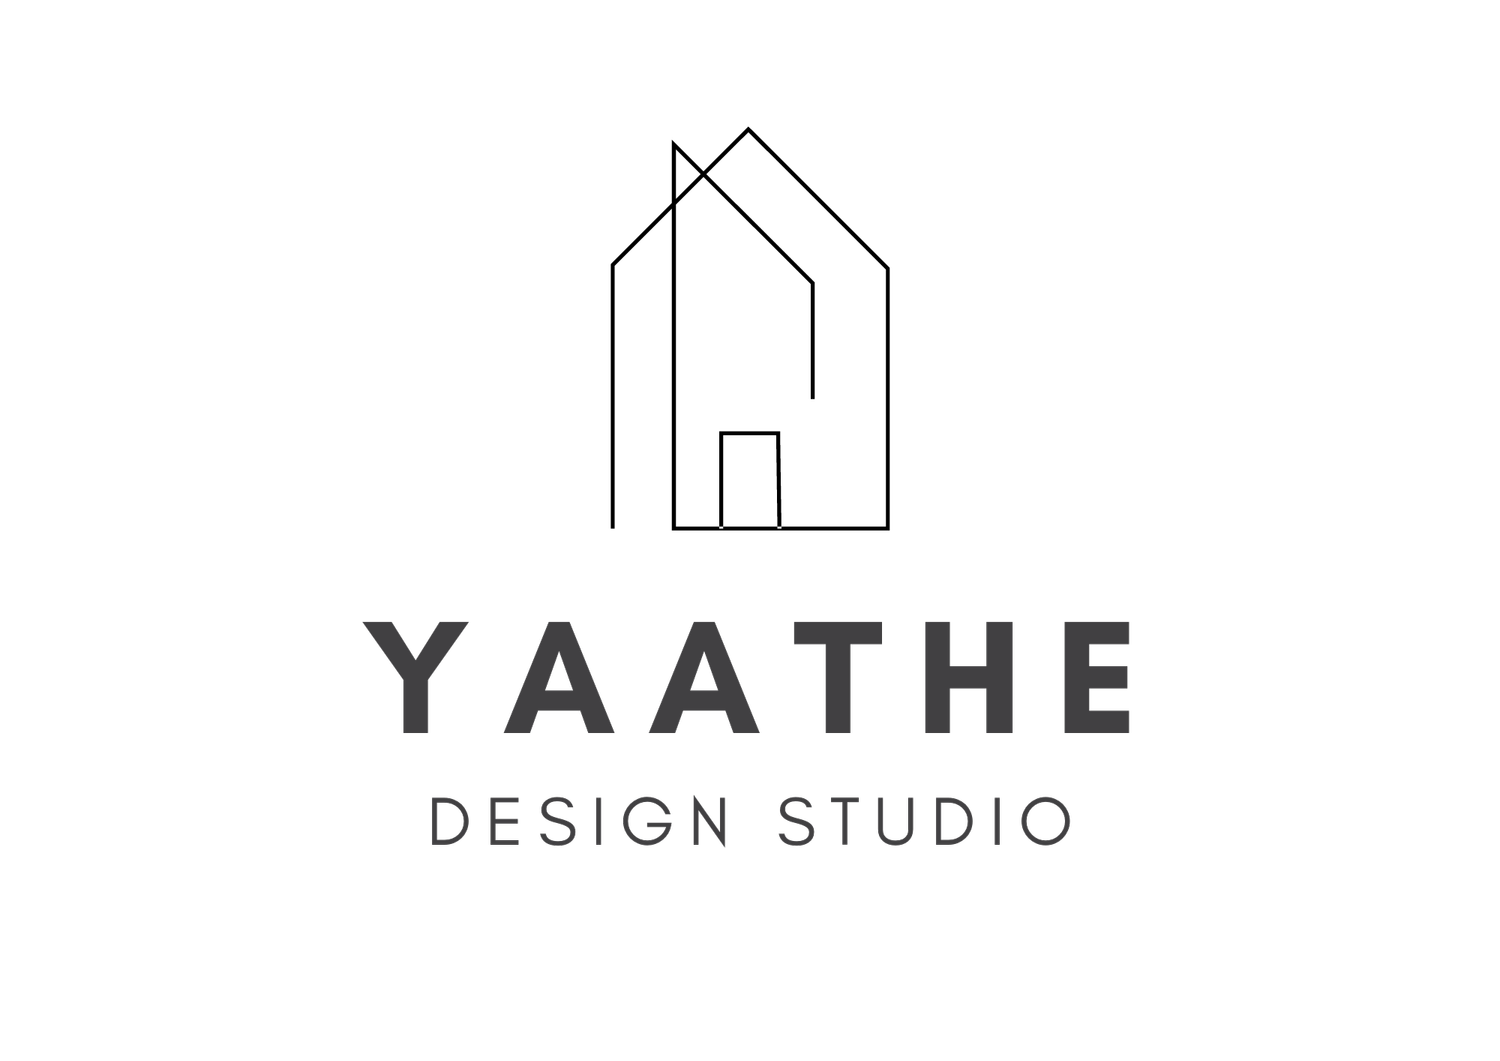 Yathee Design Studio